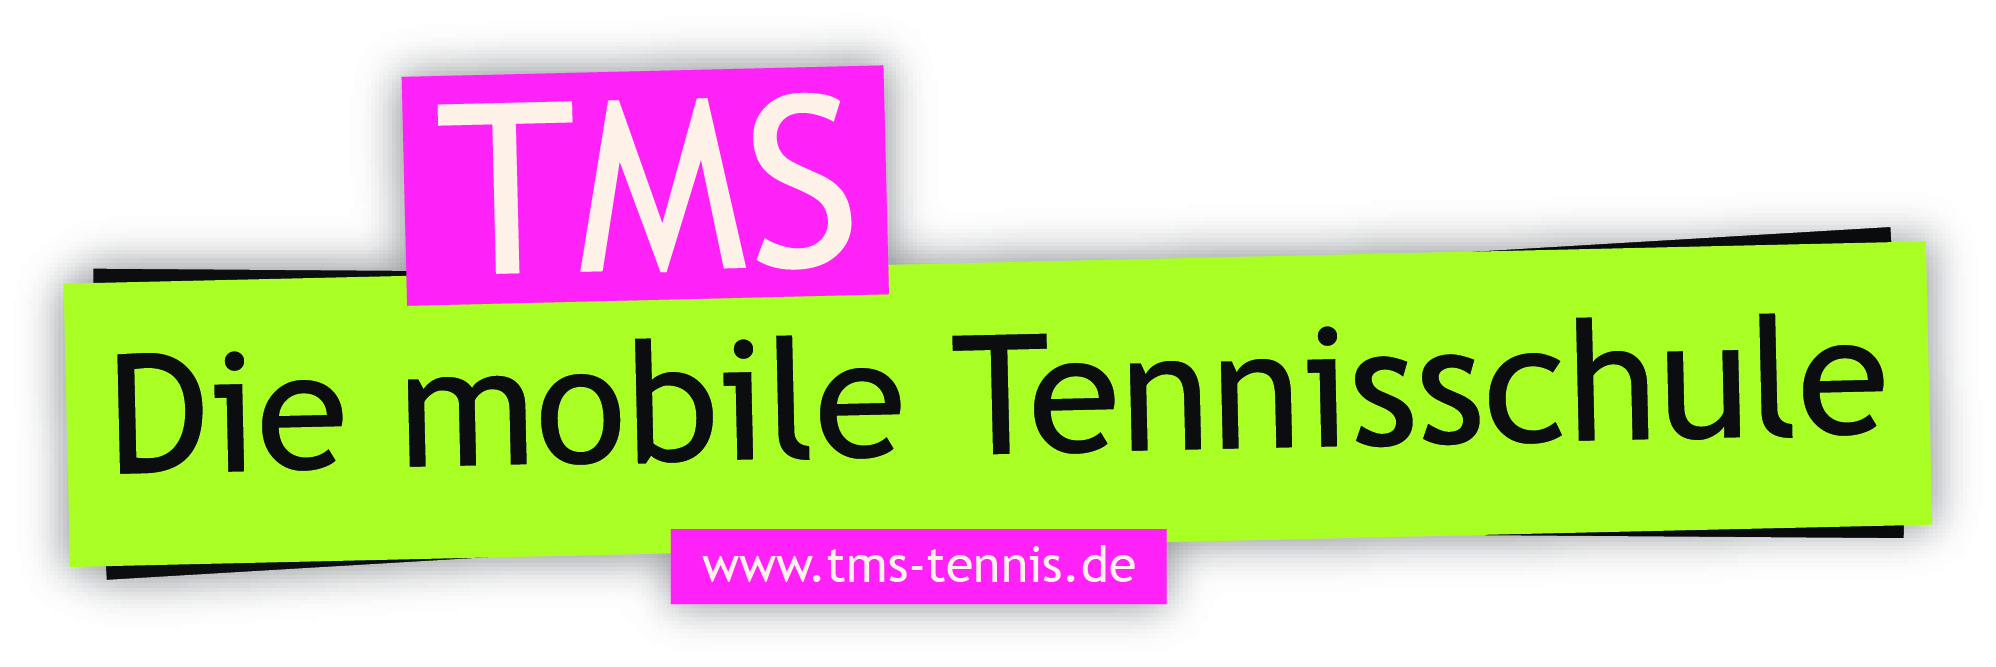 (c) Tms-tennis.de